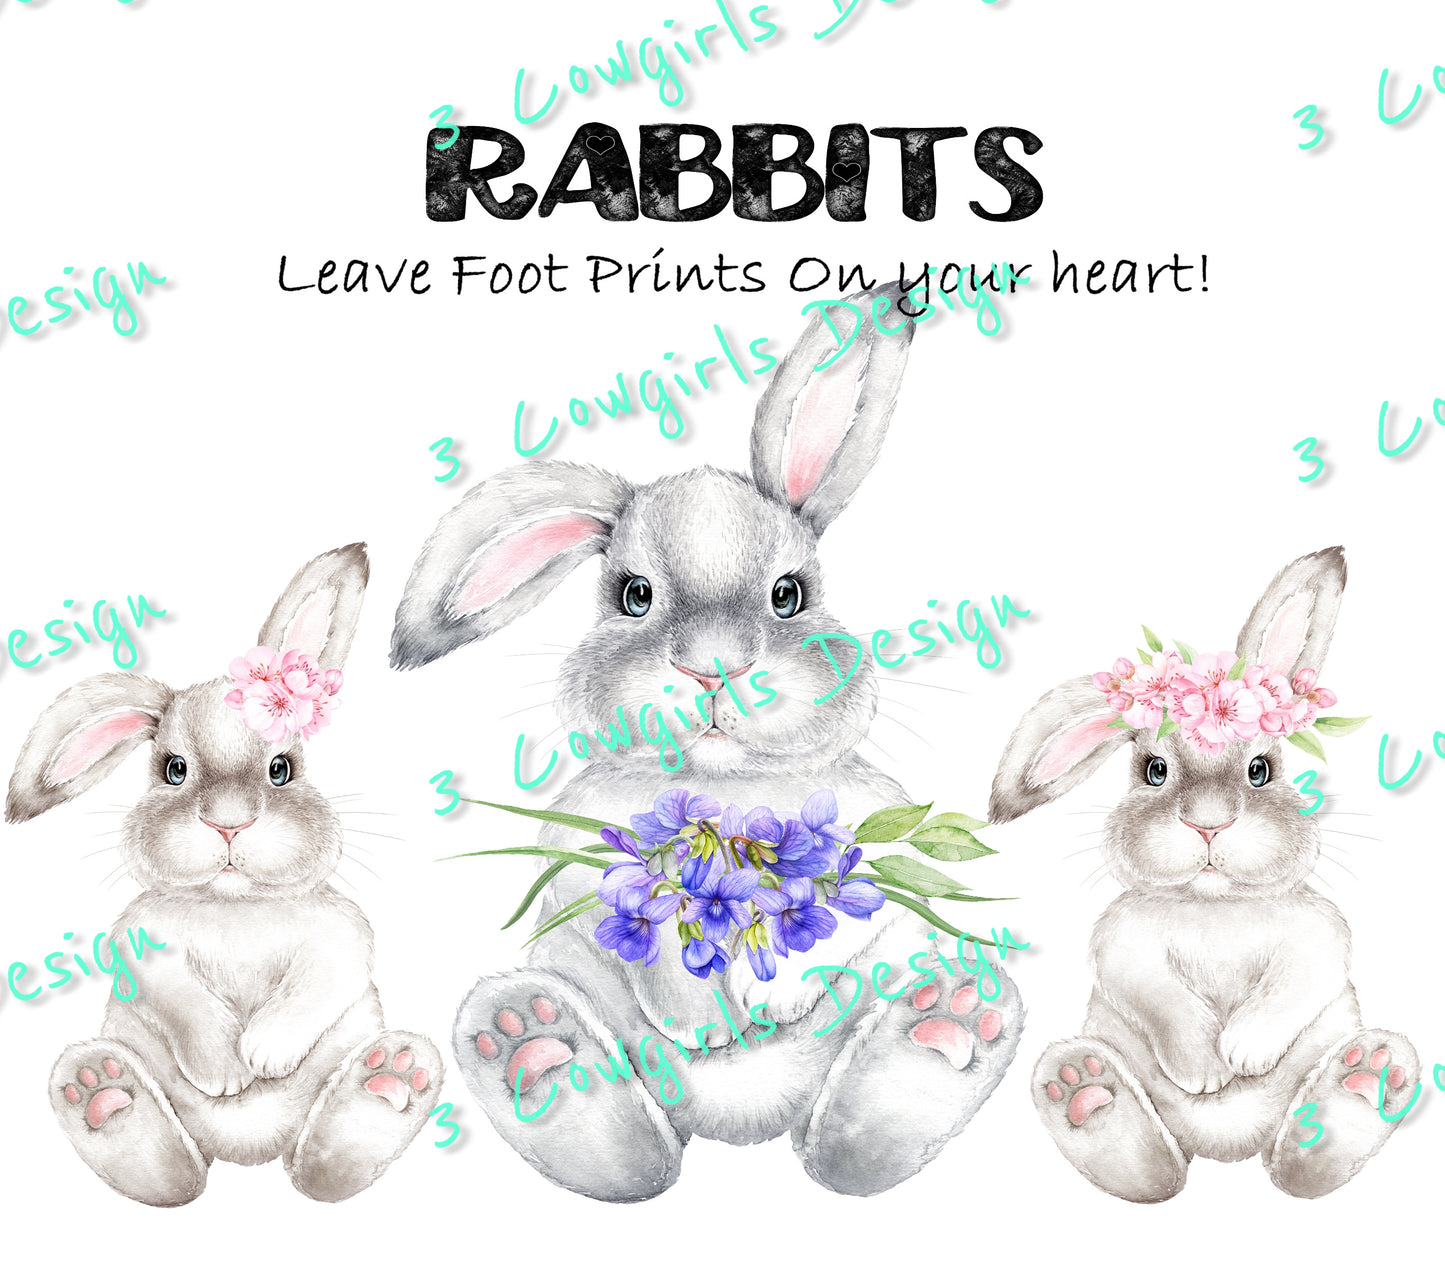 Rabbits leave footprints